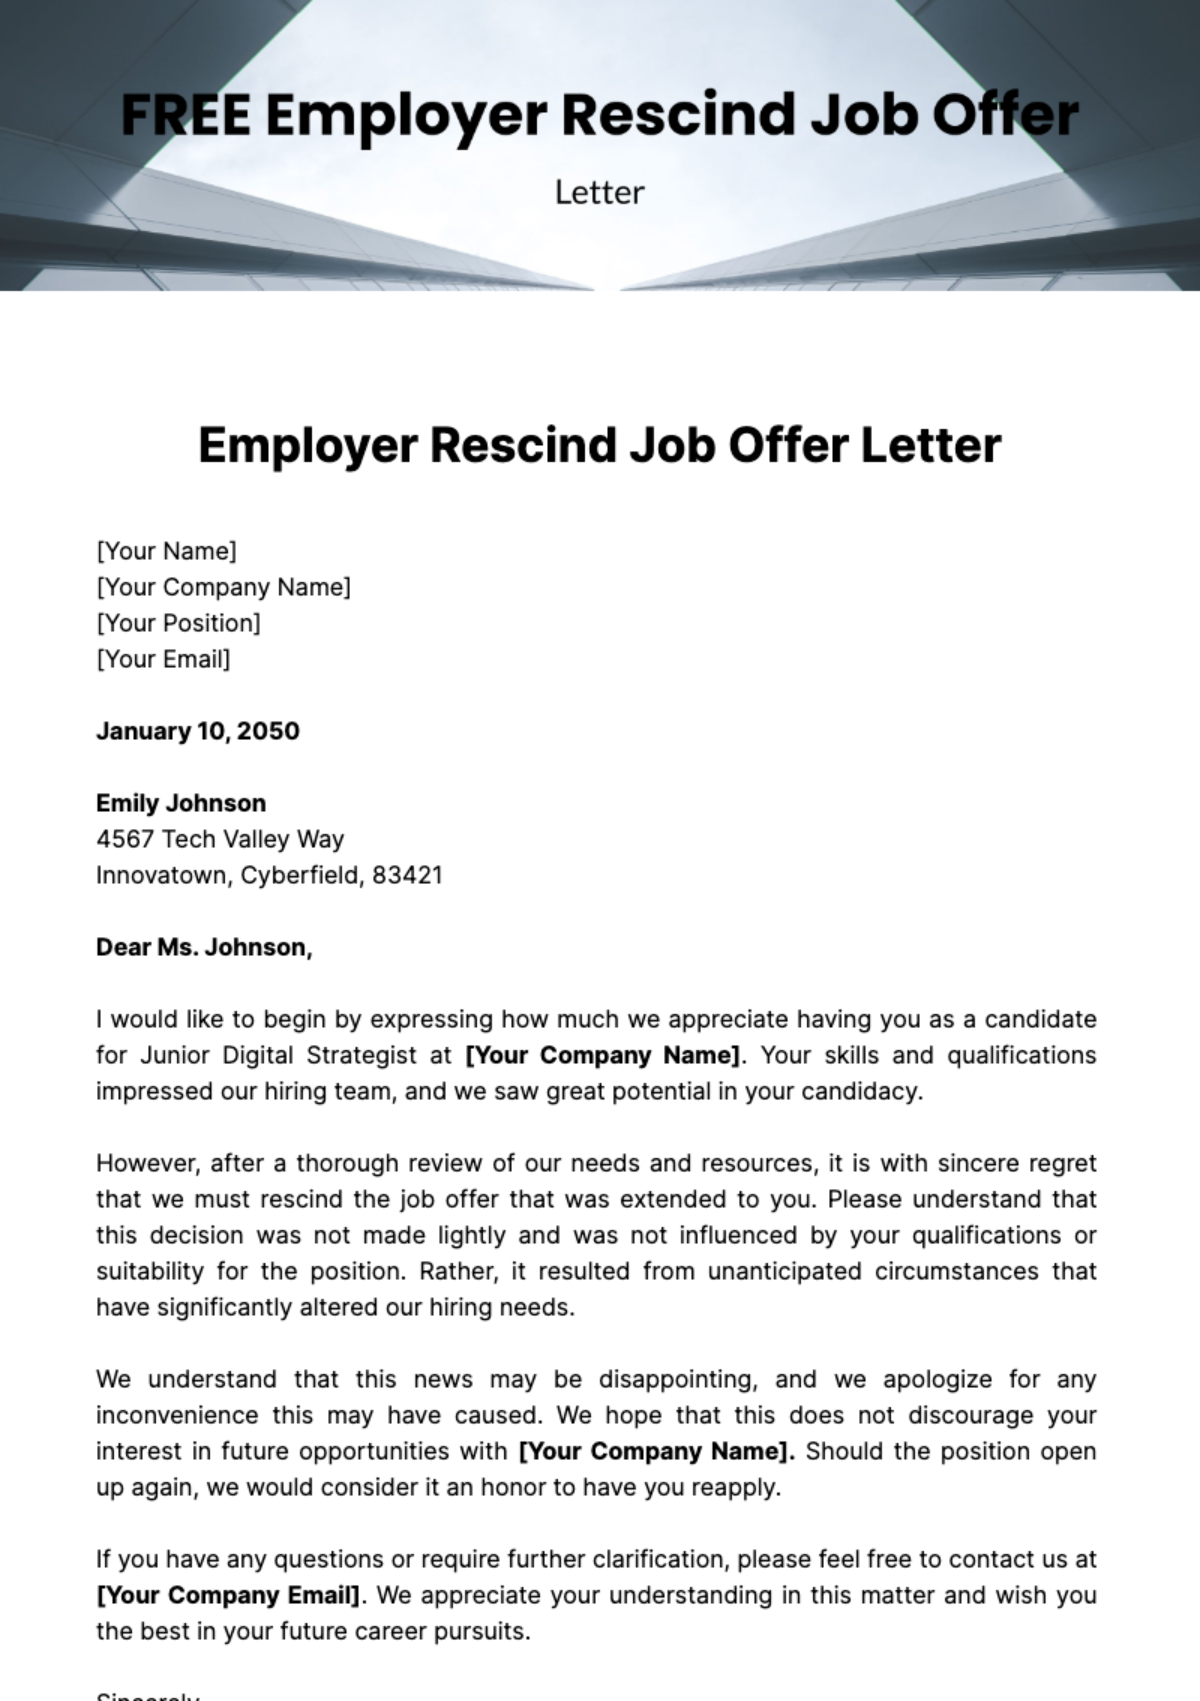 Free Employer Rescind Job Offer Letter Template